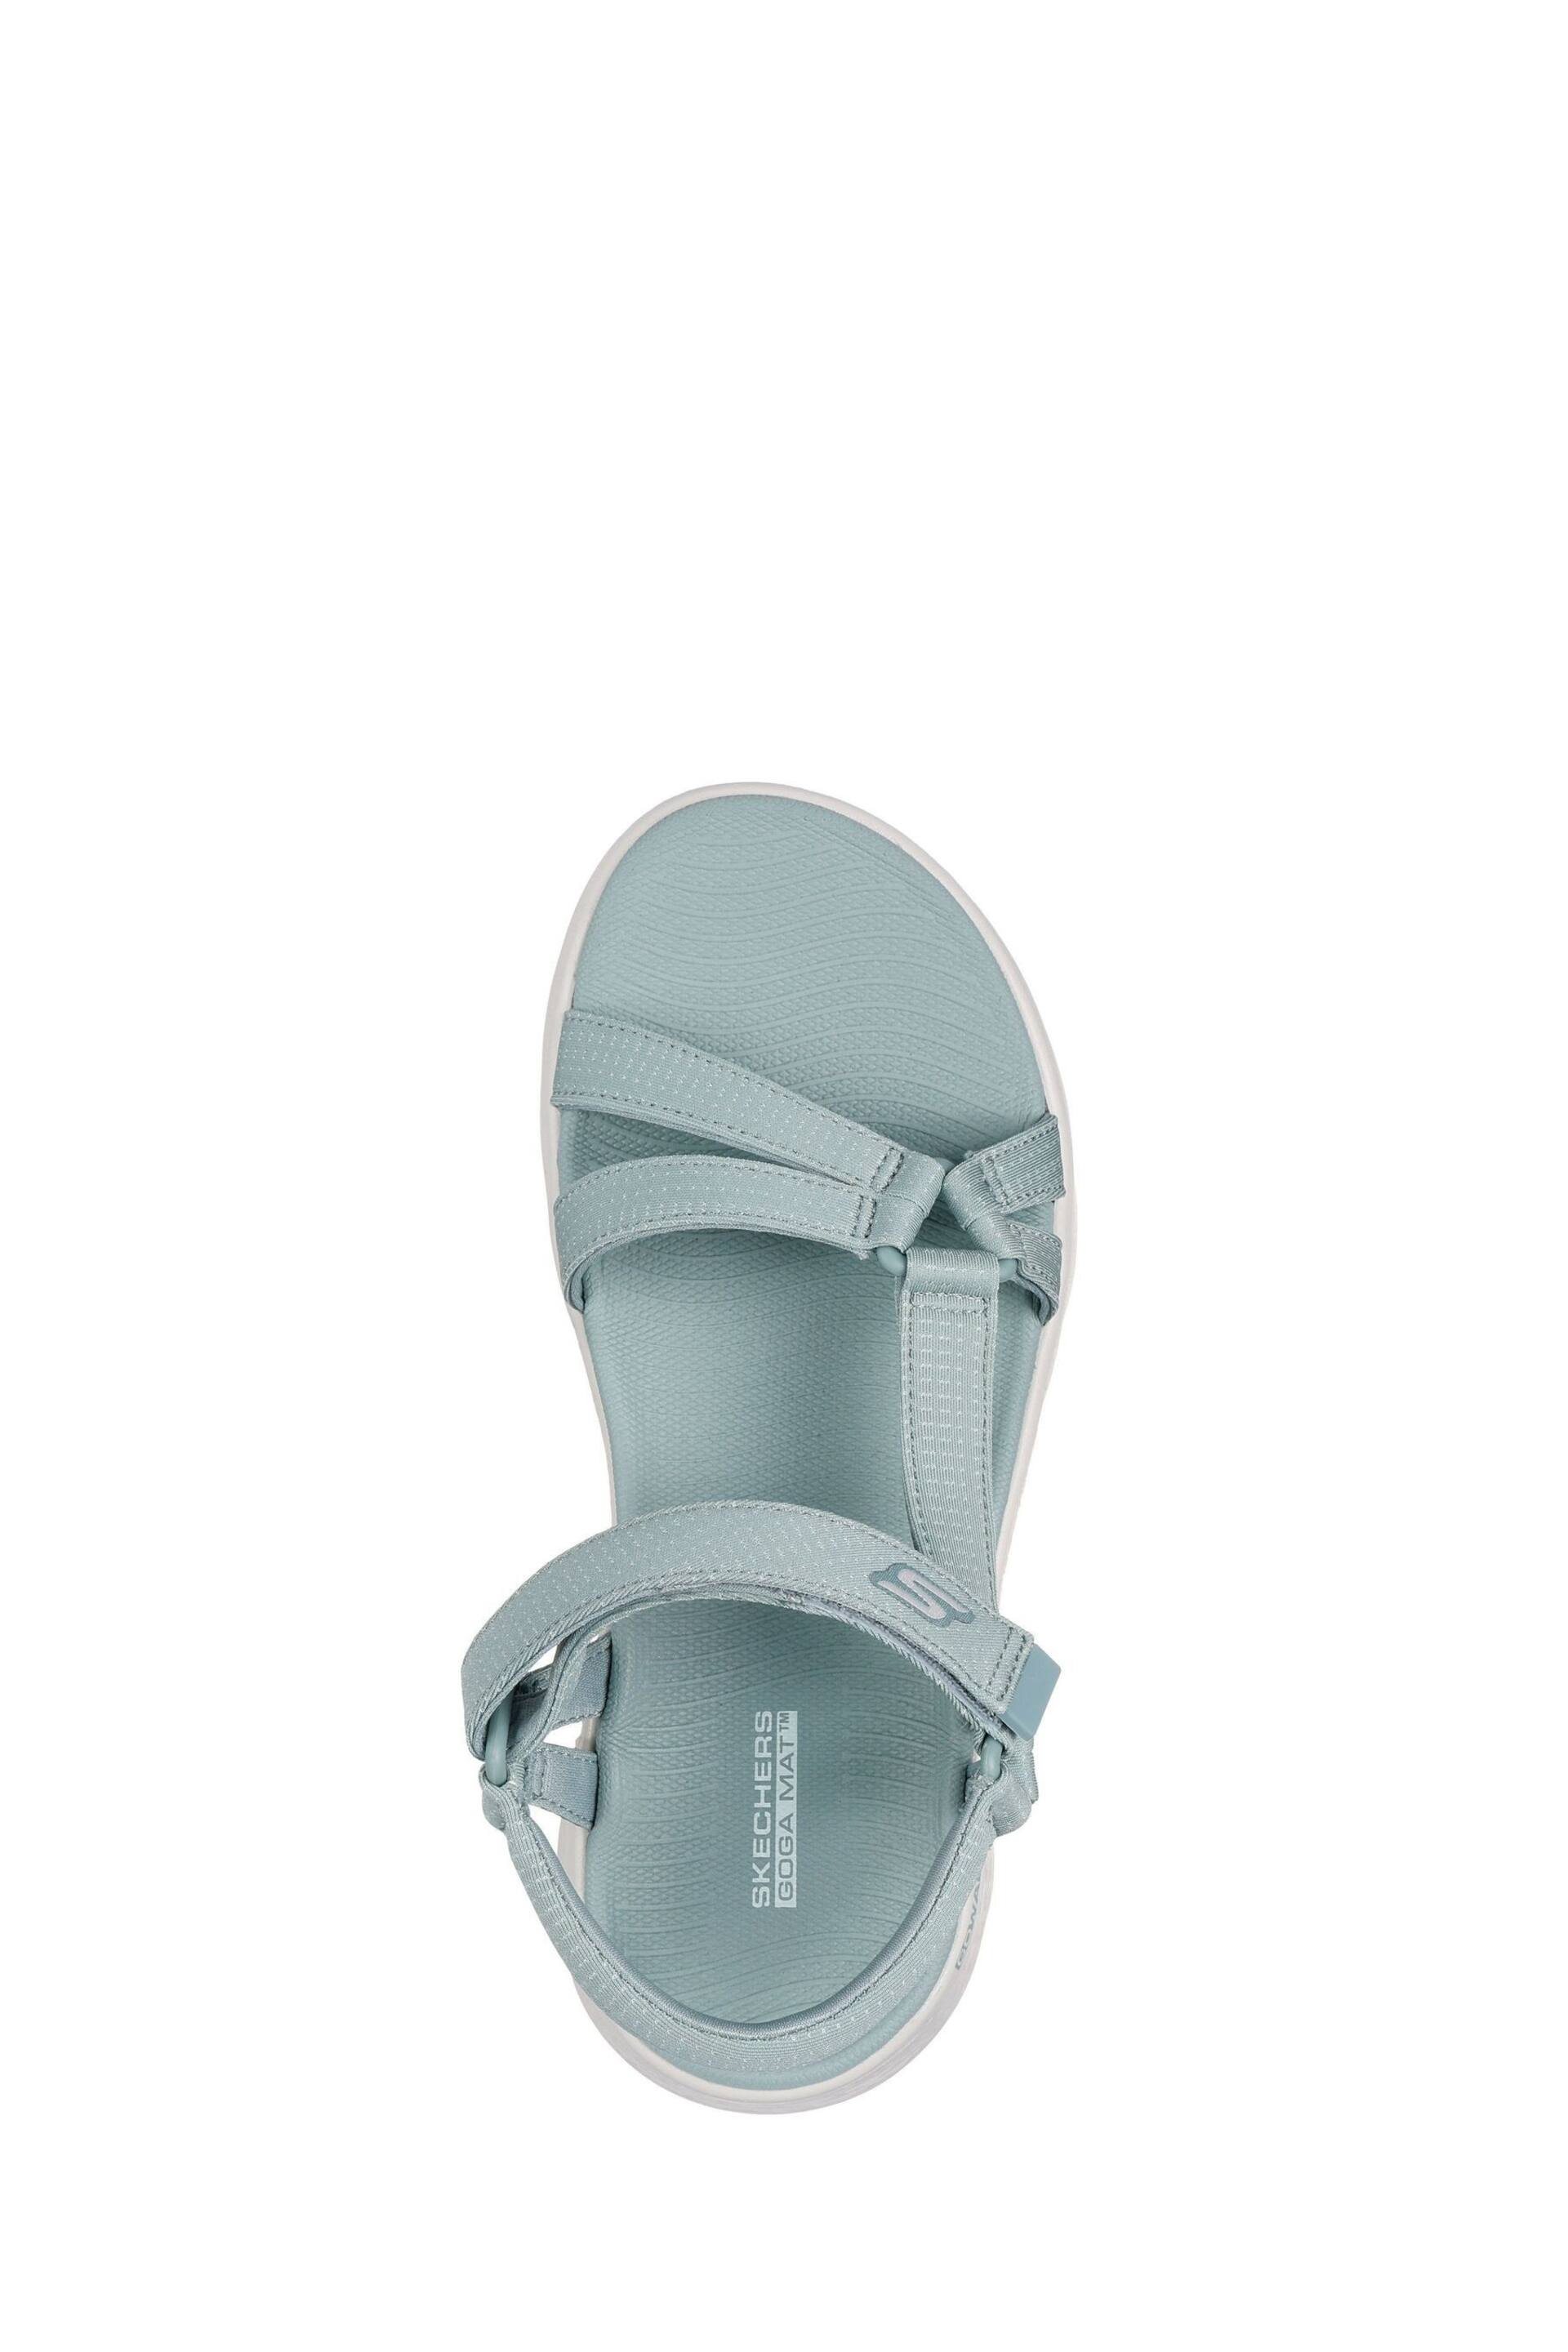 Skechers Green Go Walk Flex Sublime-X Sandals - Image 4 of 5